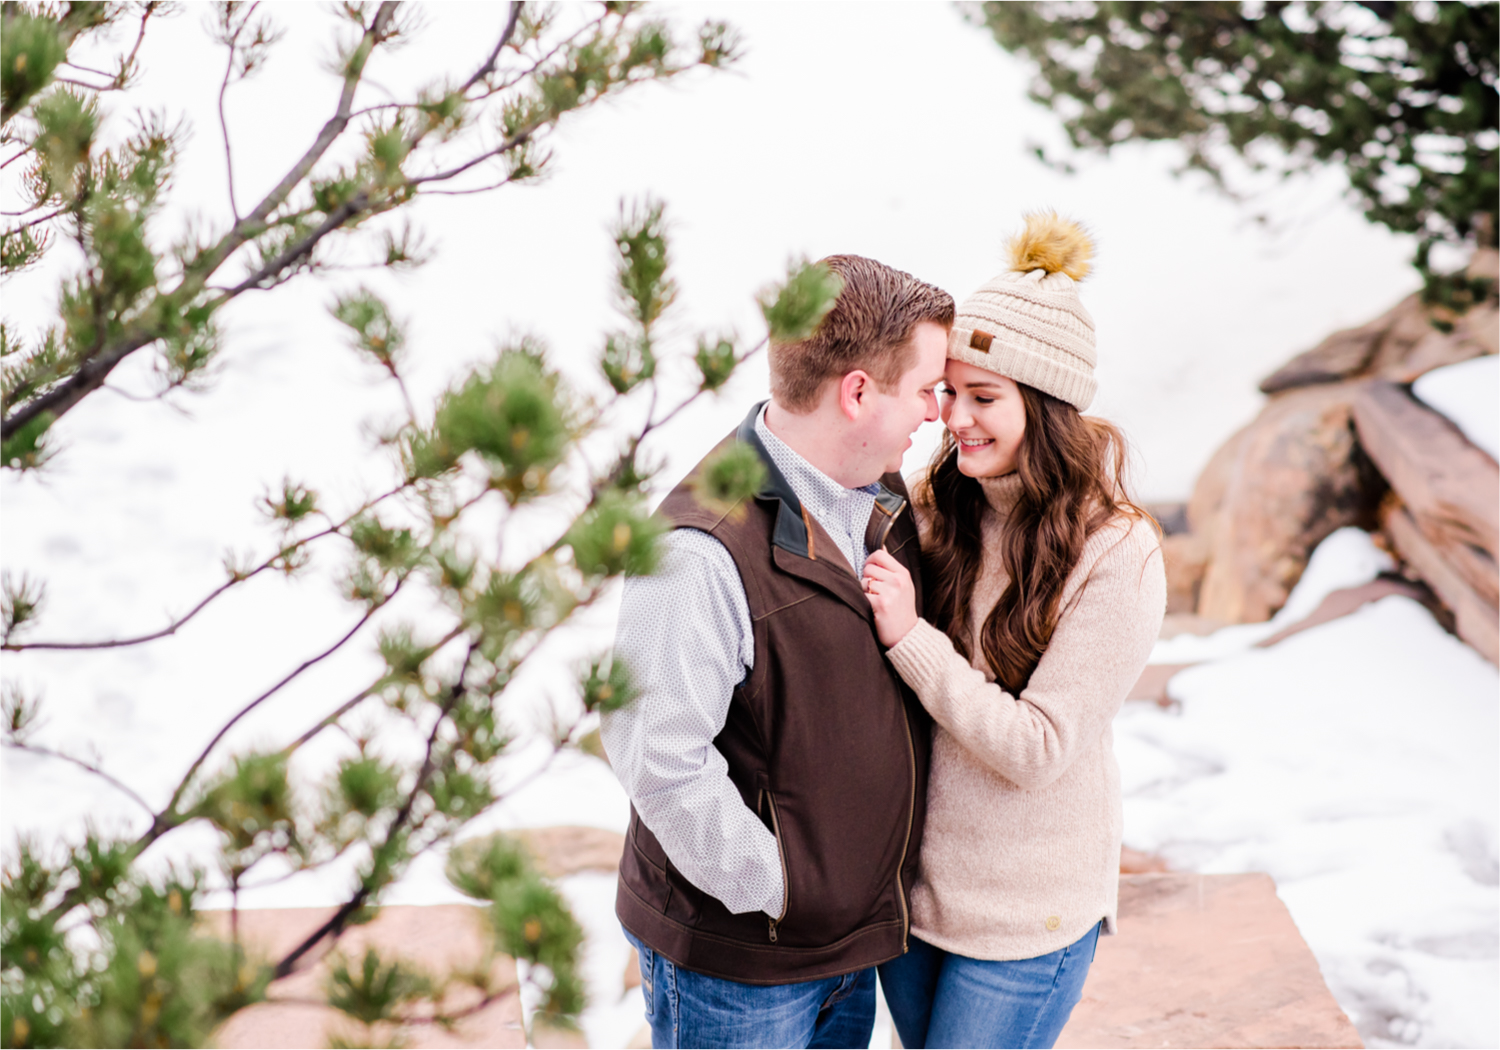 Lily Lake Winter Engagement in Estes Park | Britni Girard Photography - Colorado Wedding Photographer | Rocky Mountain National Park Photography and Downtown Estes Park River Walk